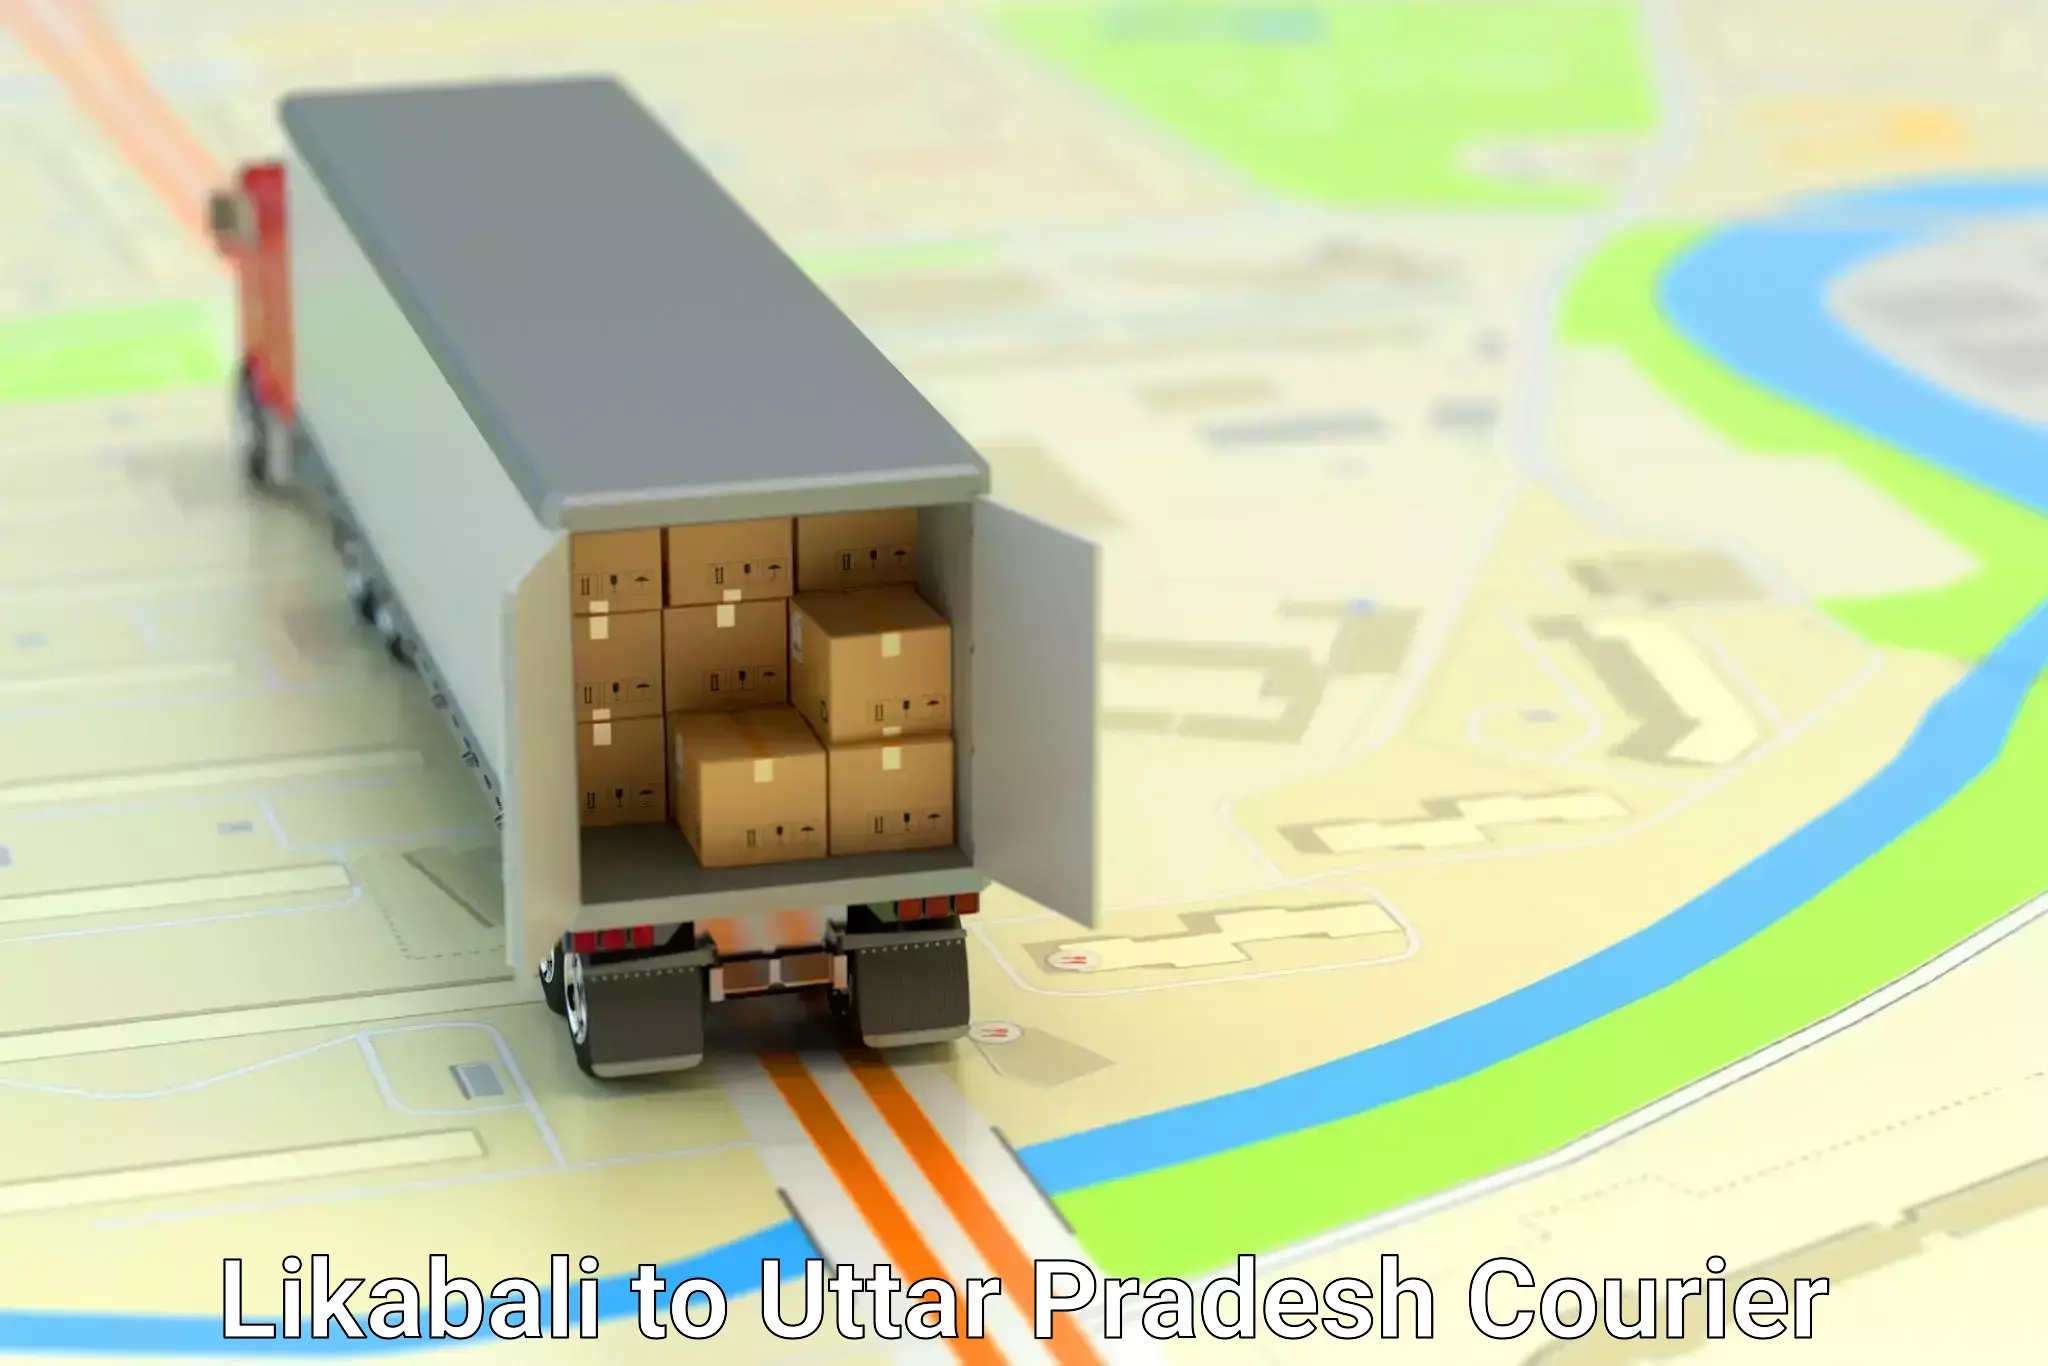 High-speed parcel service Likabali to Uttar Pradesh